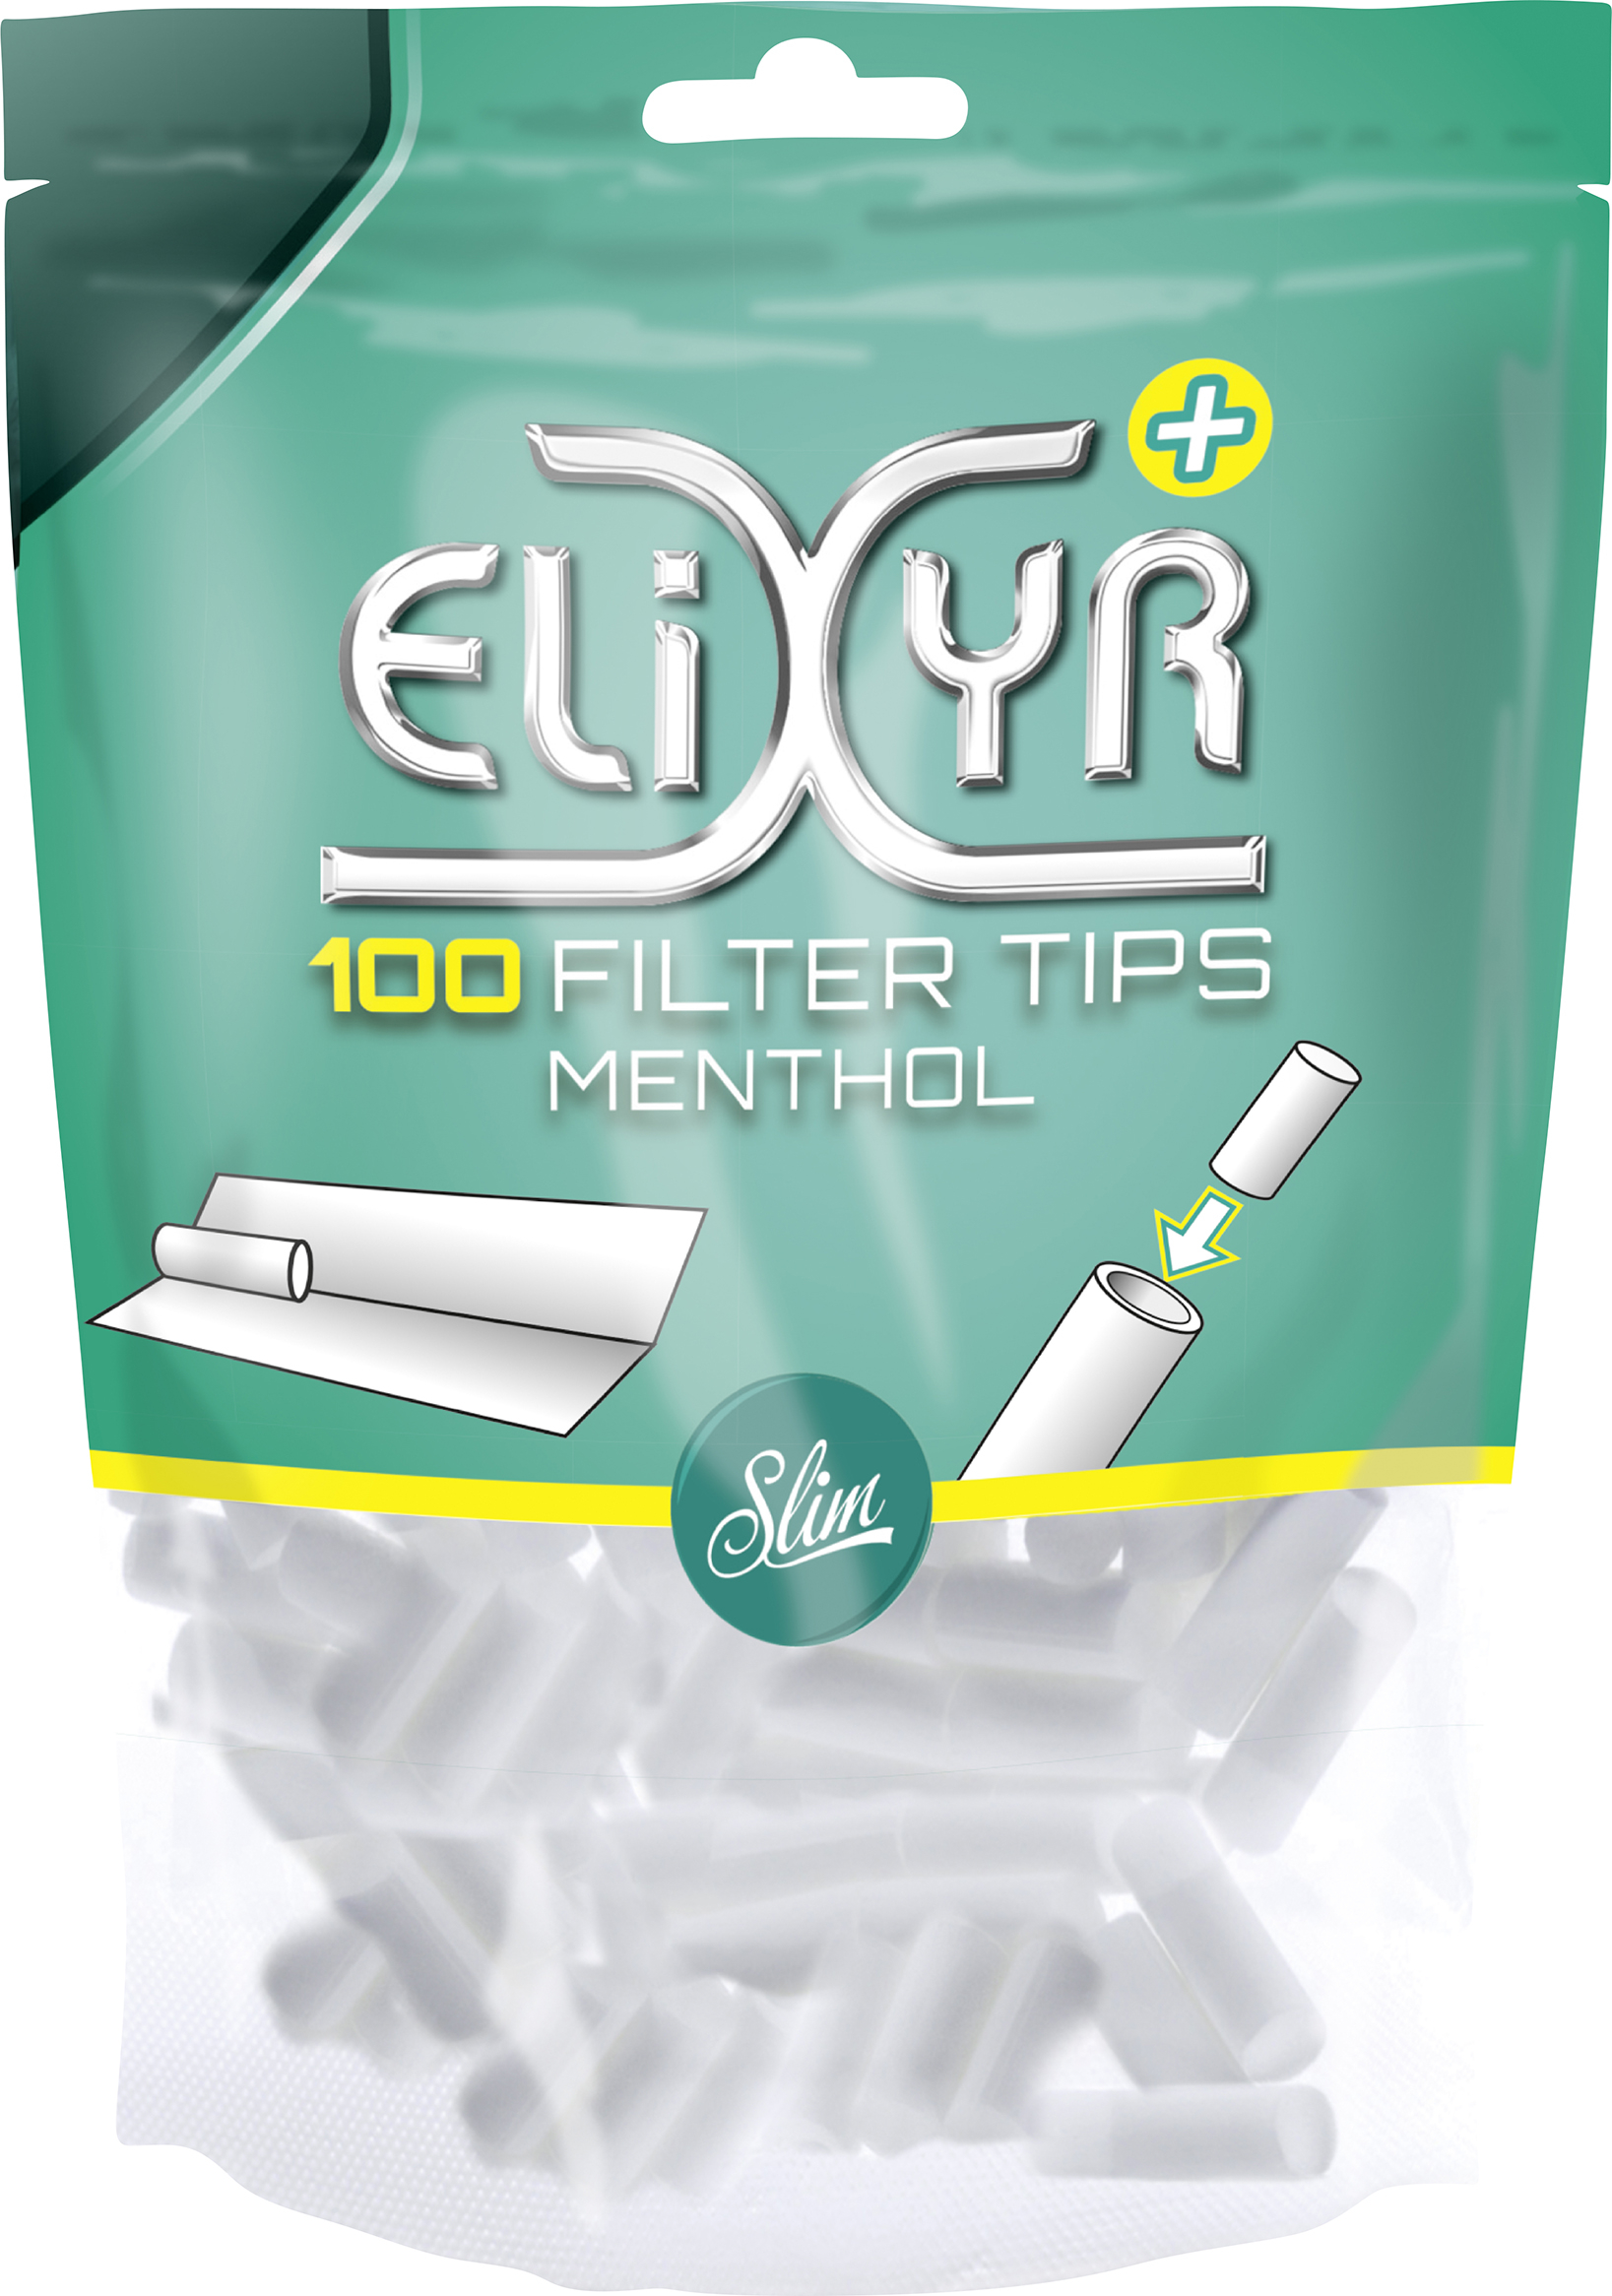 Elixyr Plus Menthol Filter Tips